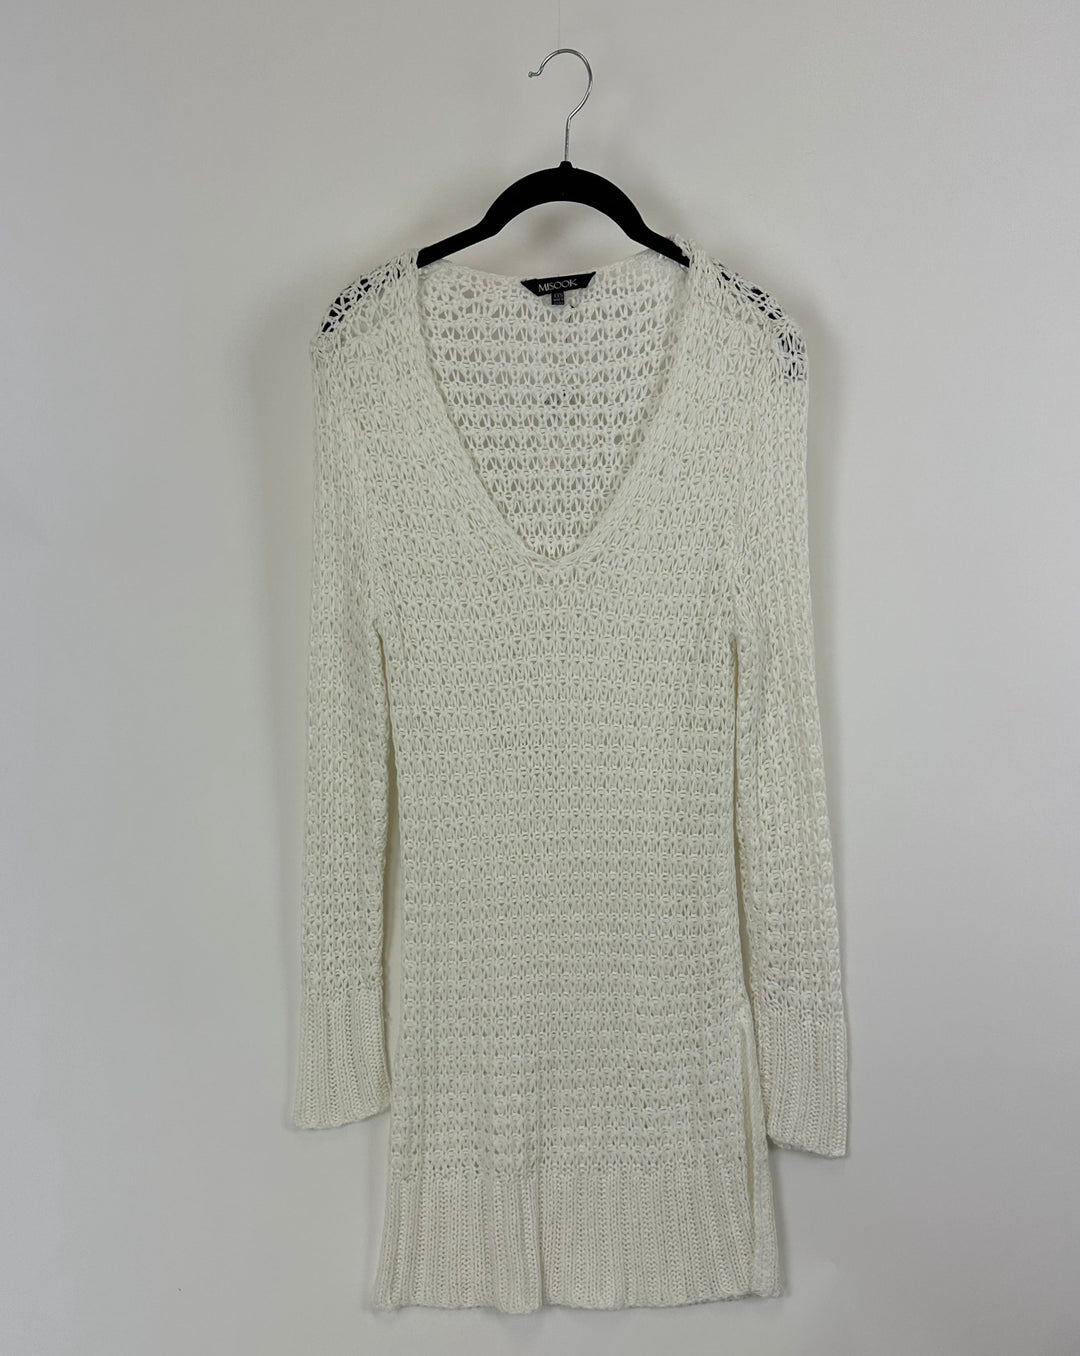 White Crotchet Dress - Size 0-2